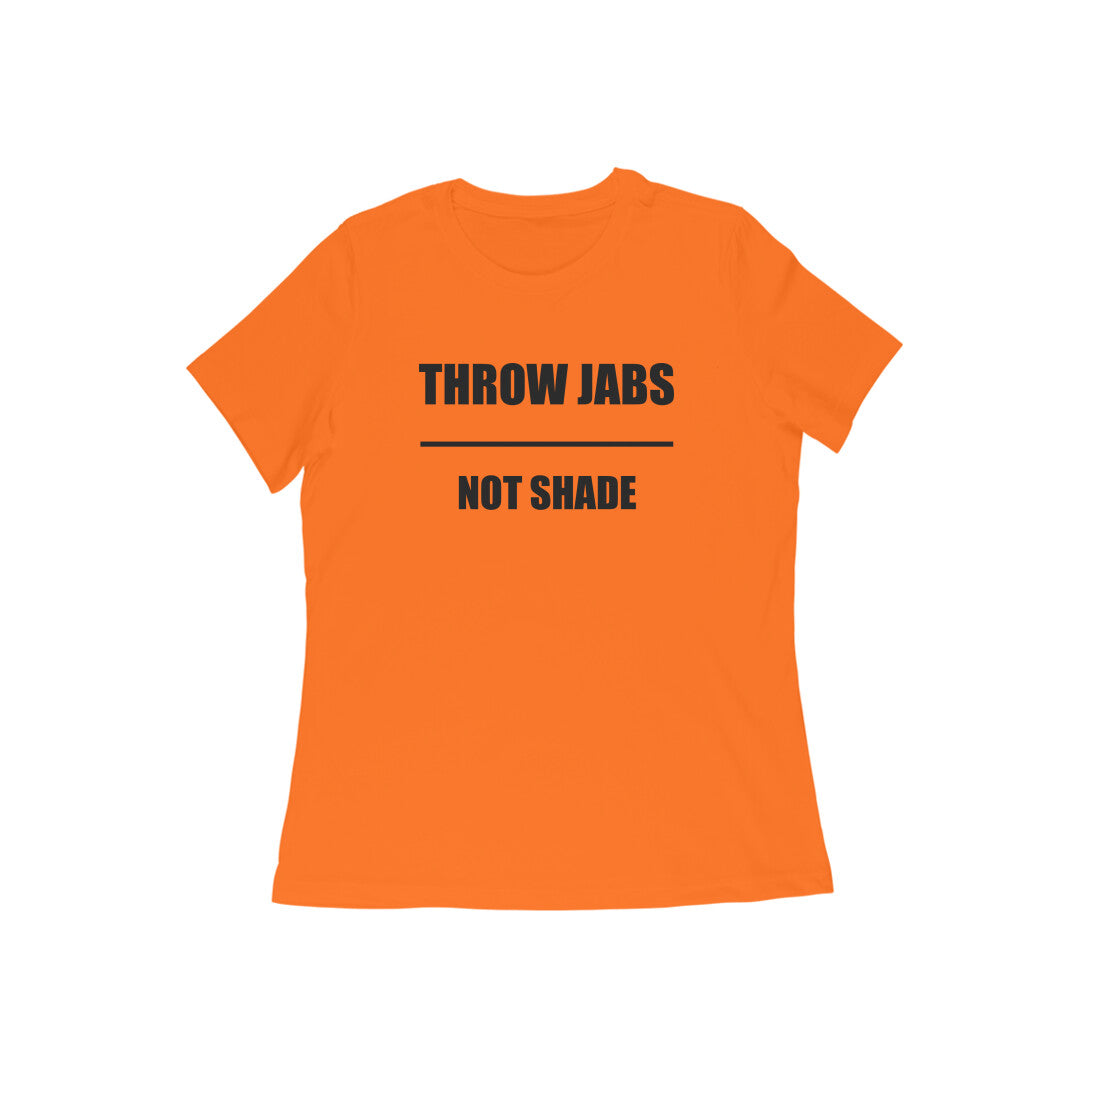 Throw Jabs not Shade. Boxing T-shirt